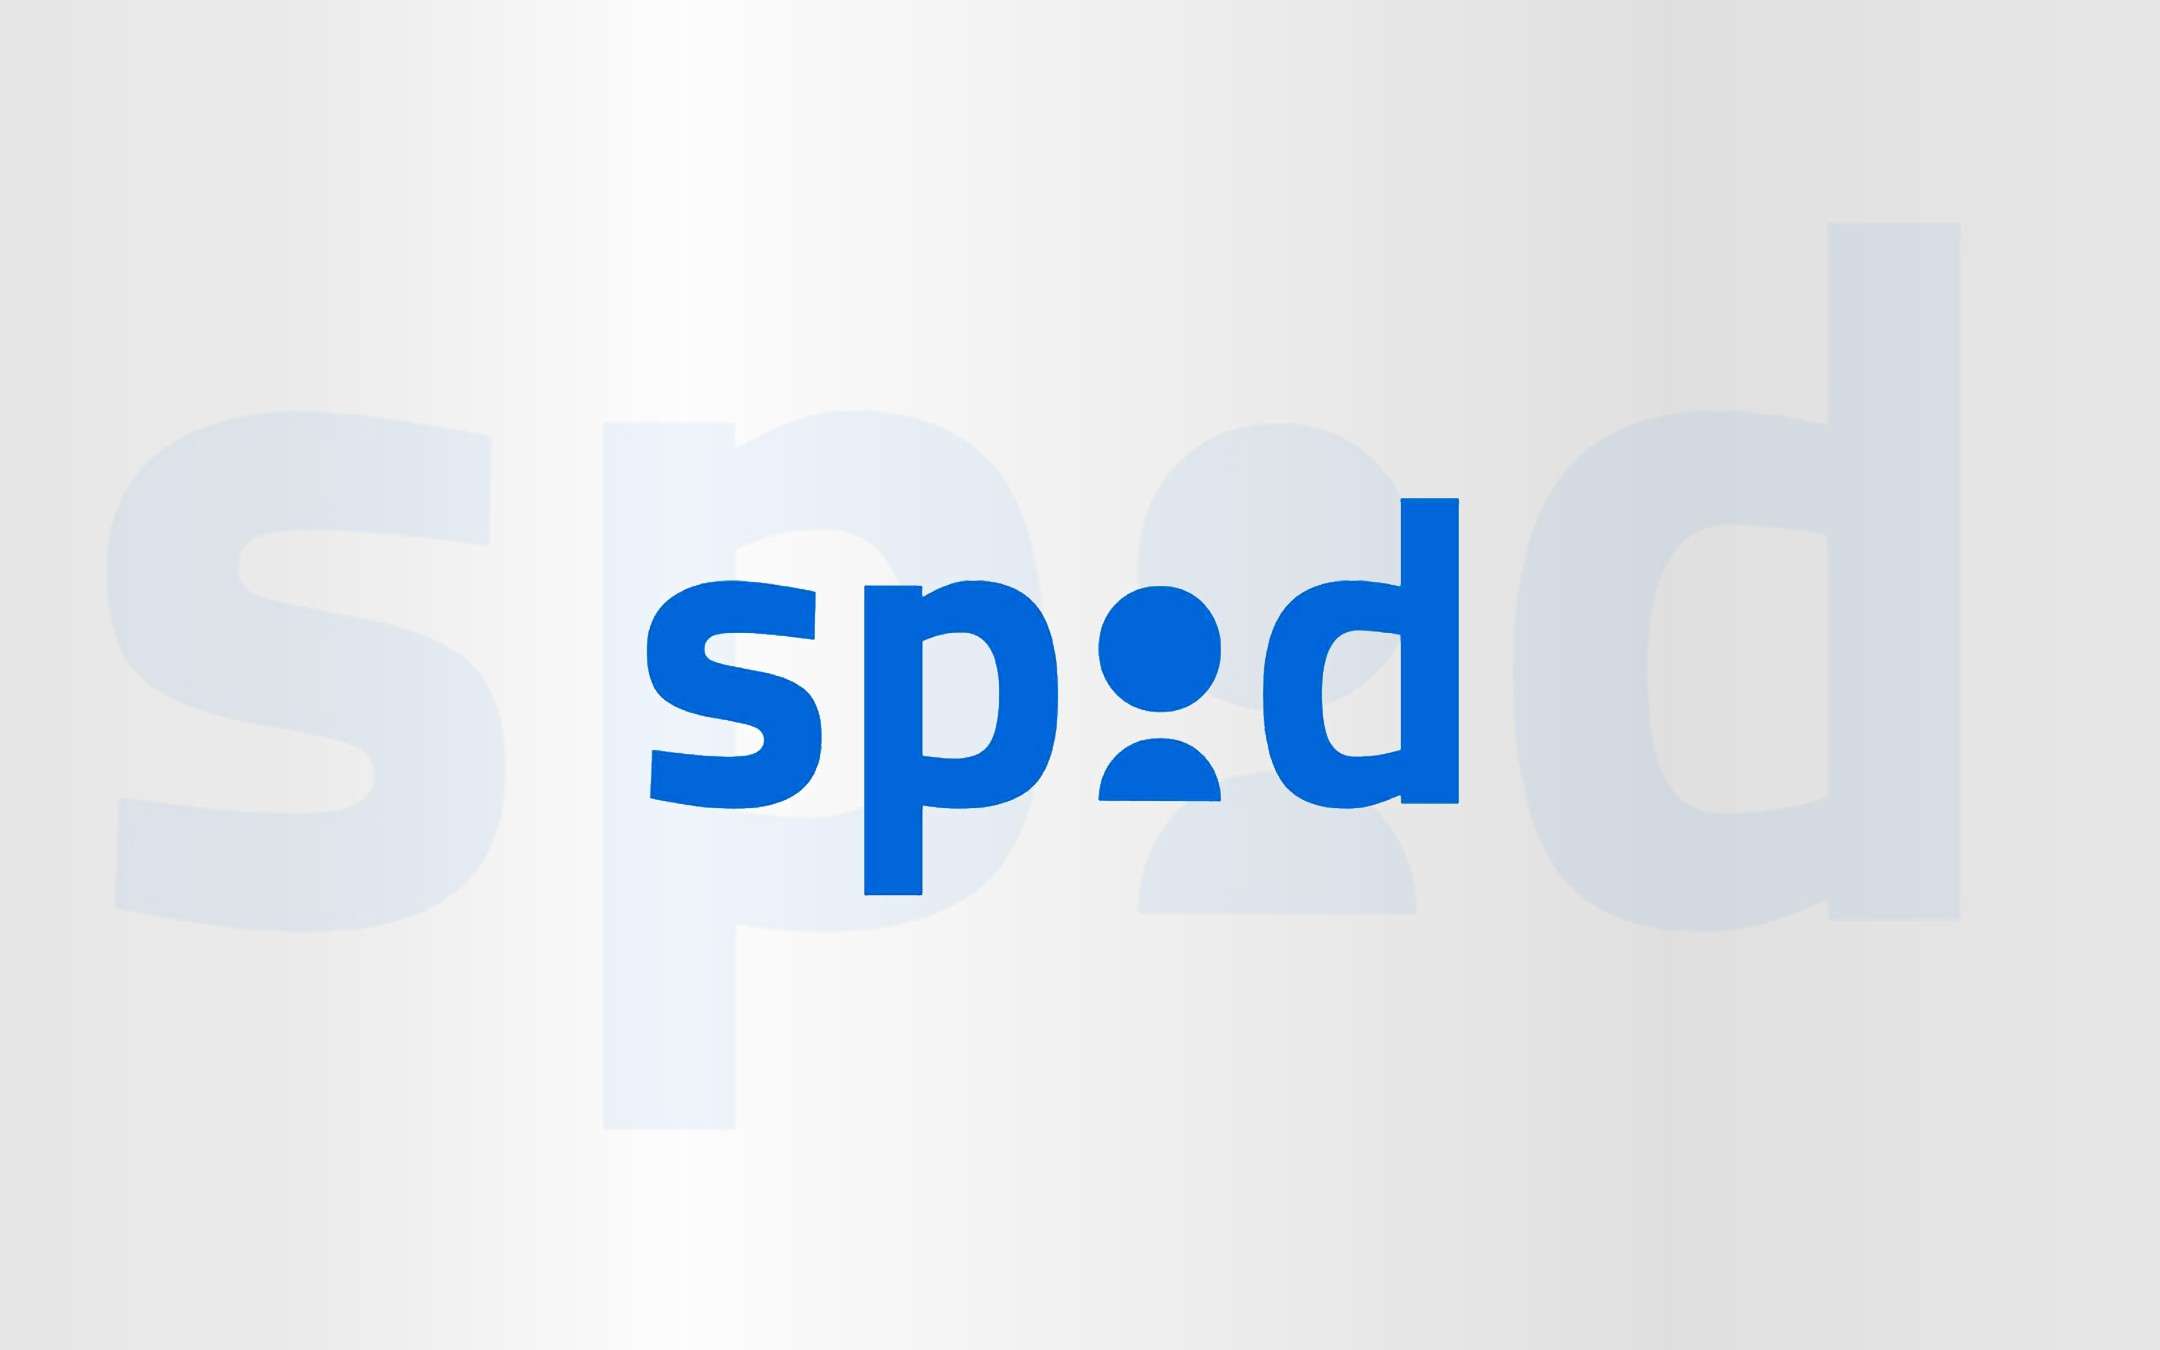 SPID, exceeded 9 million with bonus shots